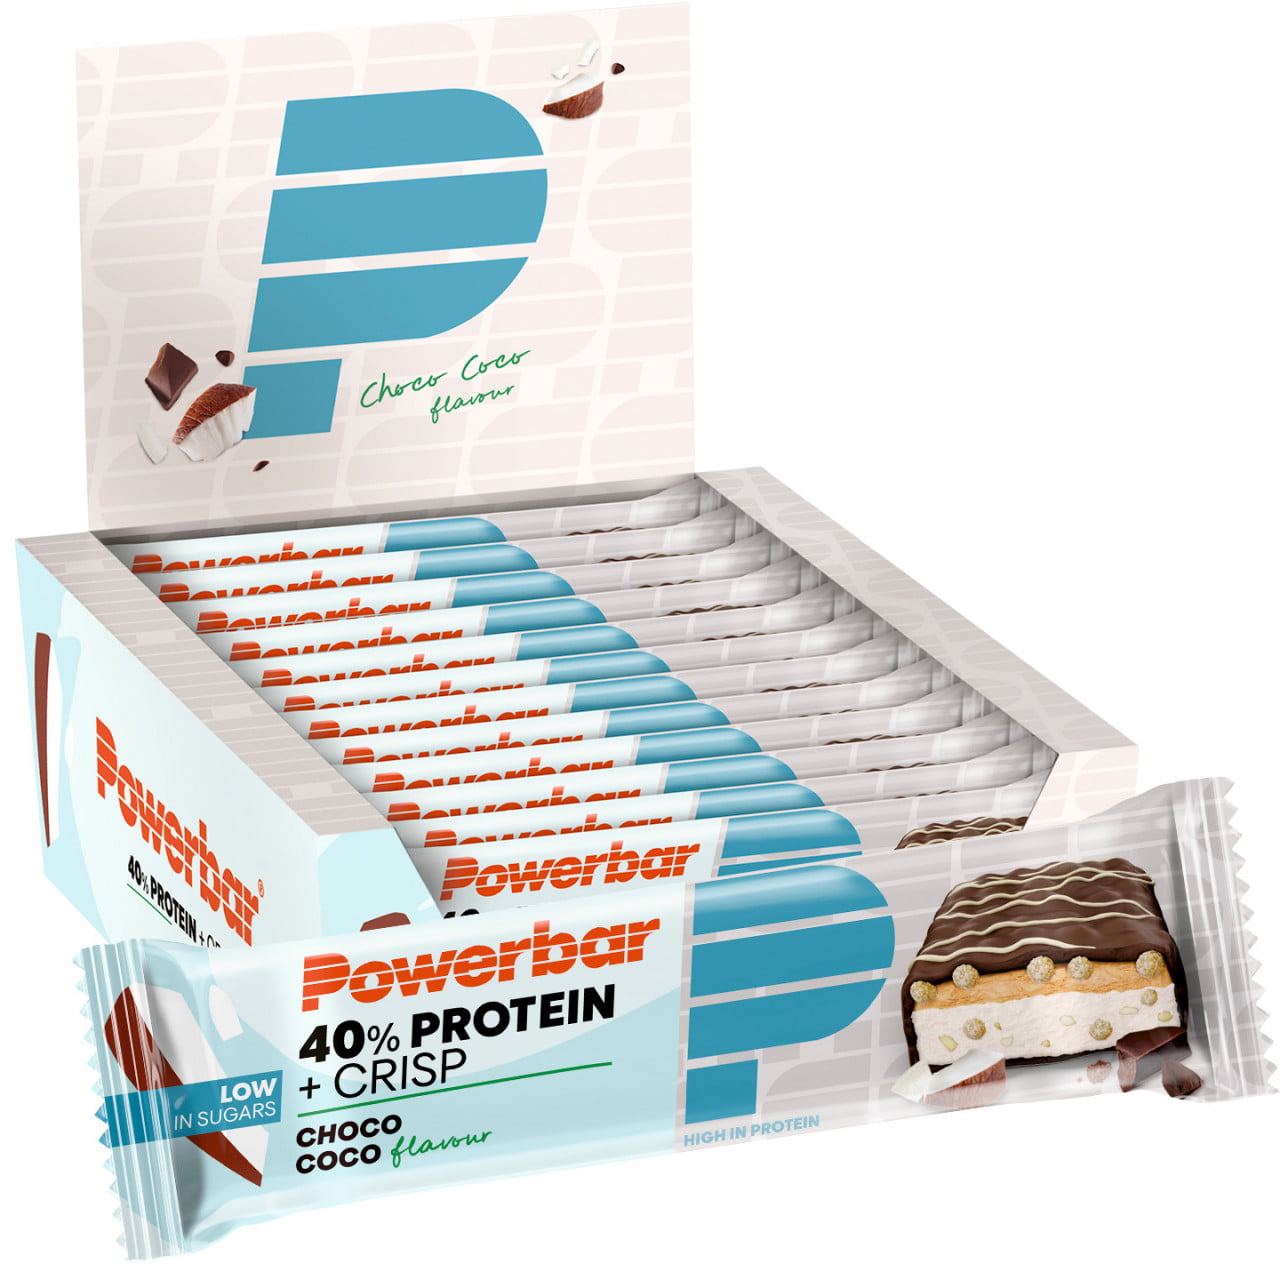 40% Protein+ Crisp Riegel Choco Coco 12 Stck.